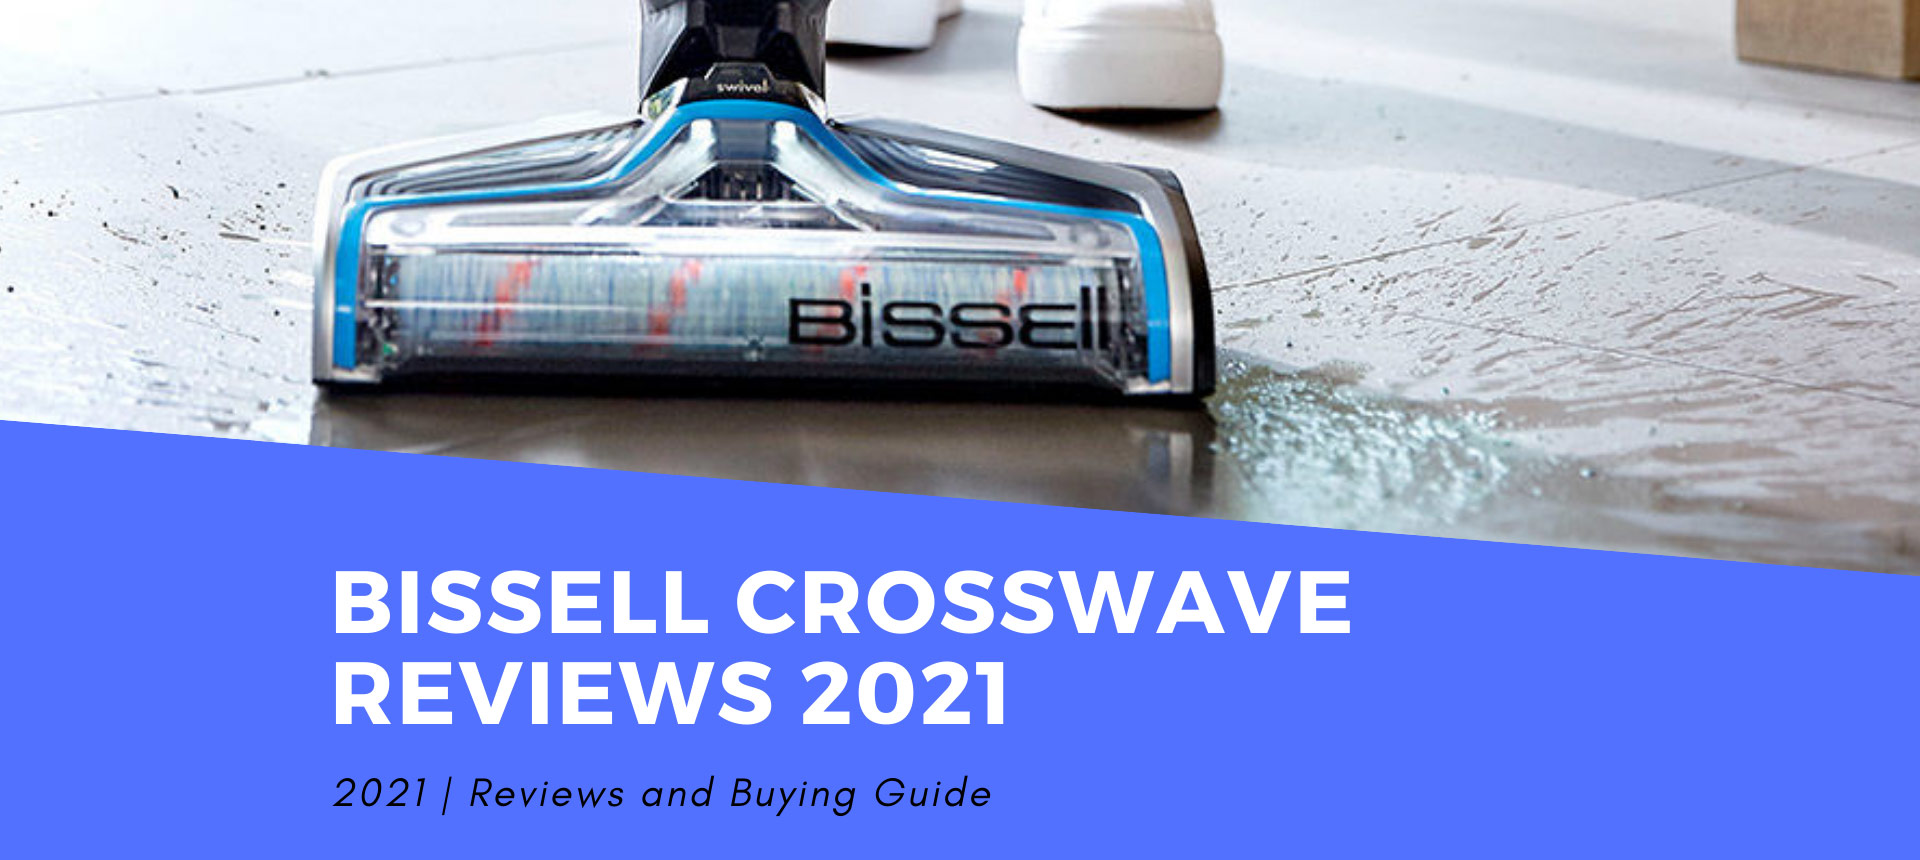 Bissell Crosswave Reviews 2021